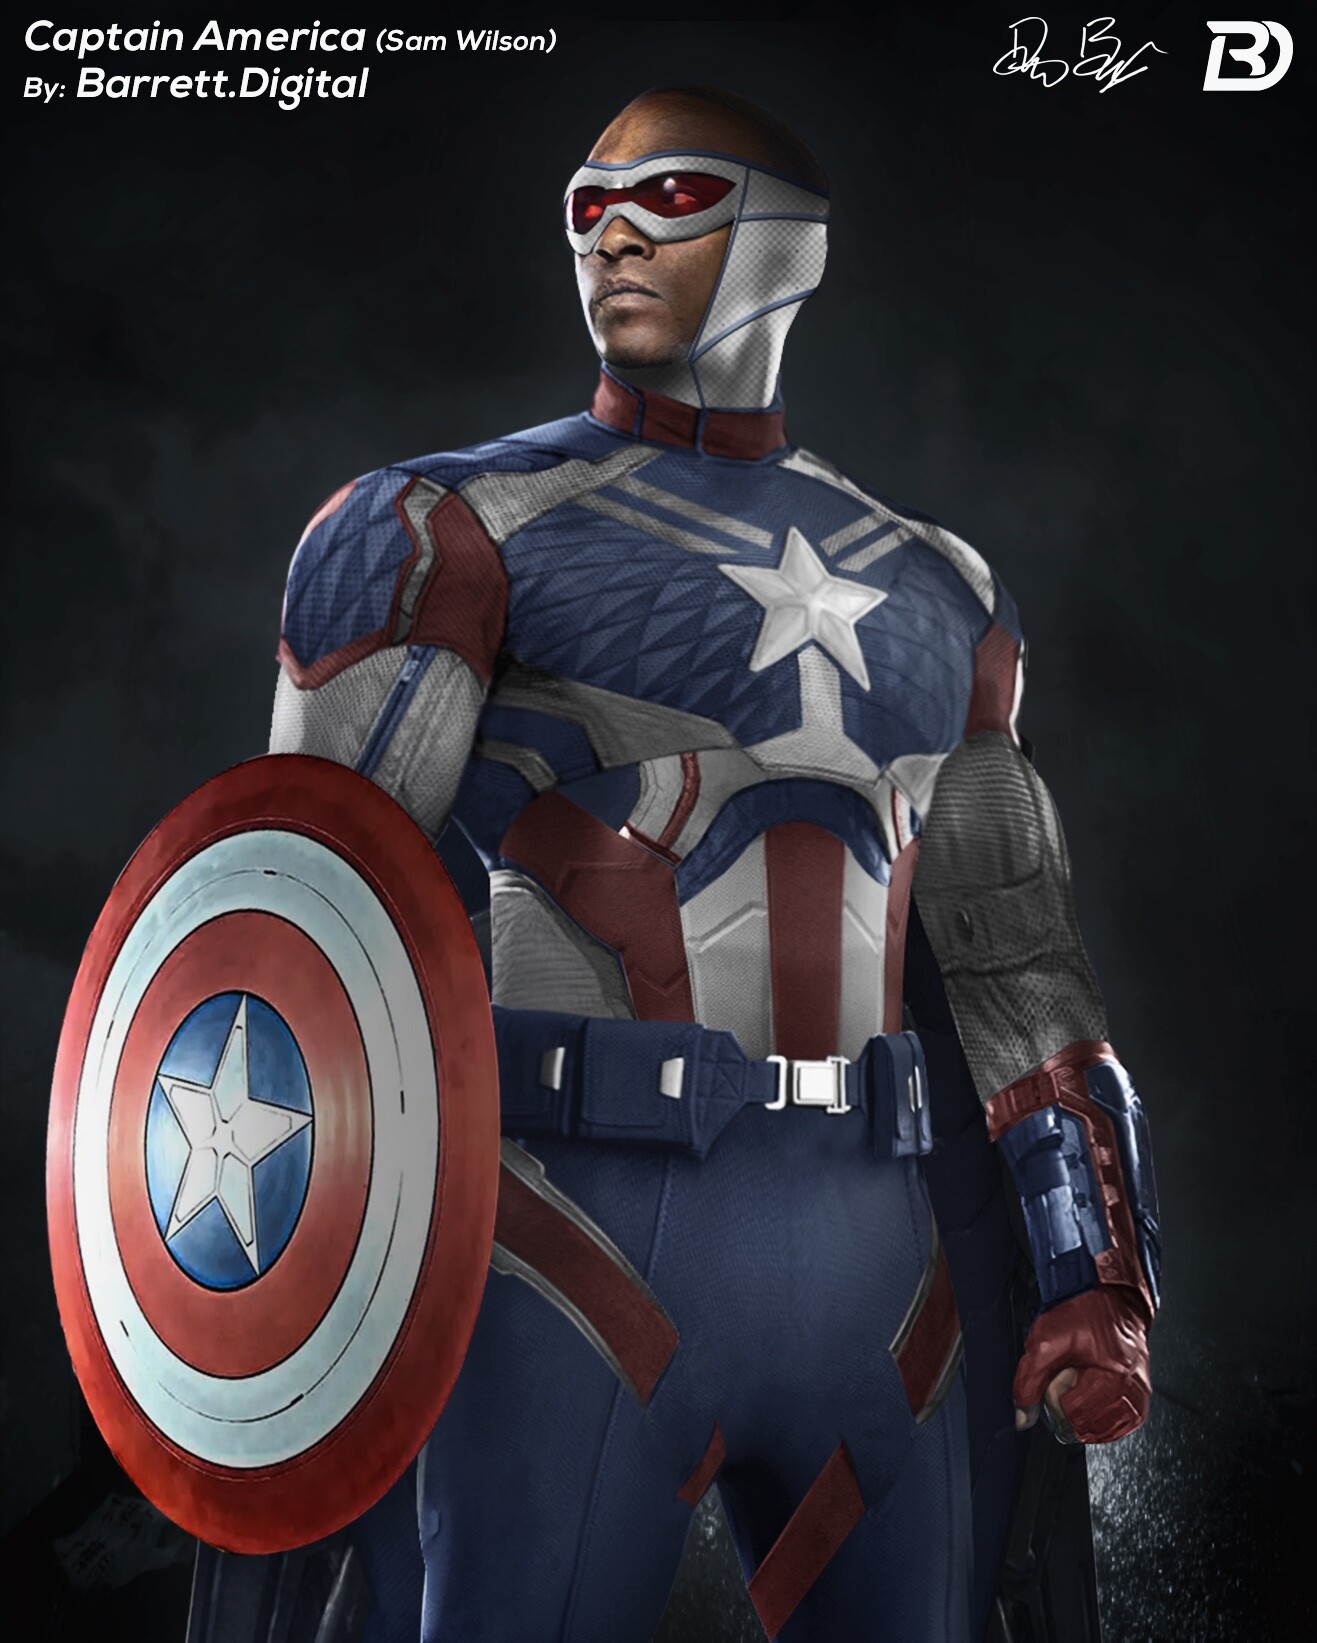 Falcon captain america suit